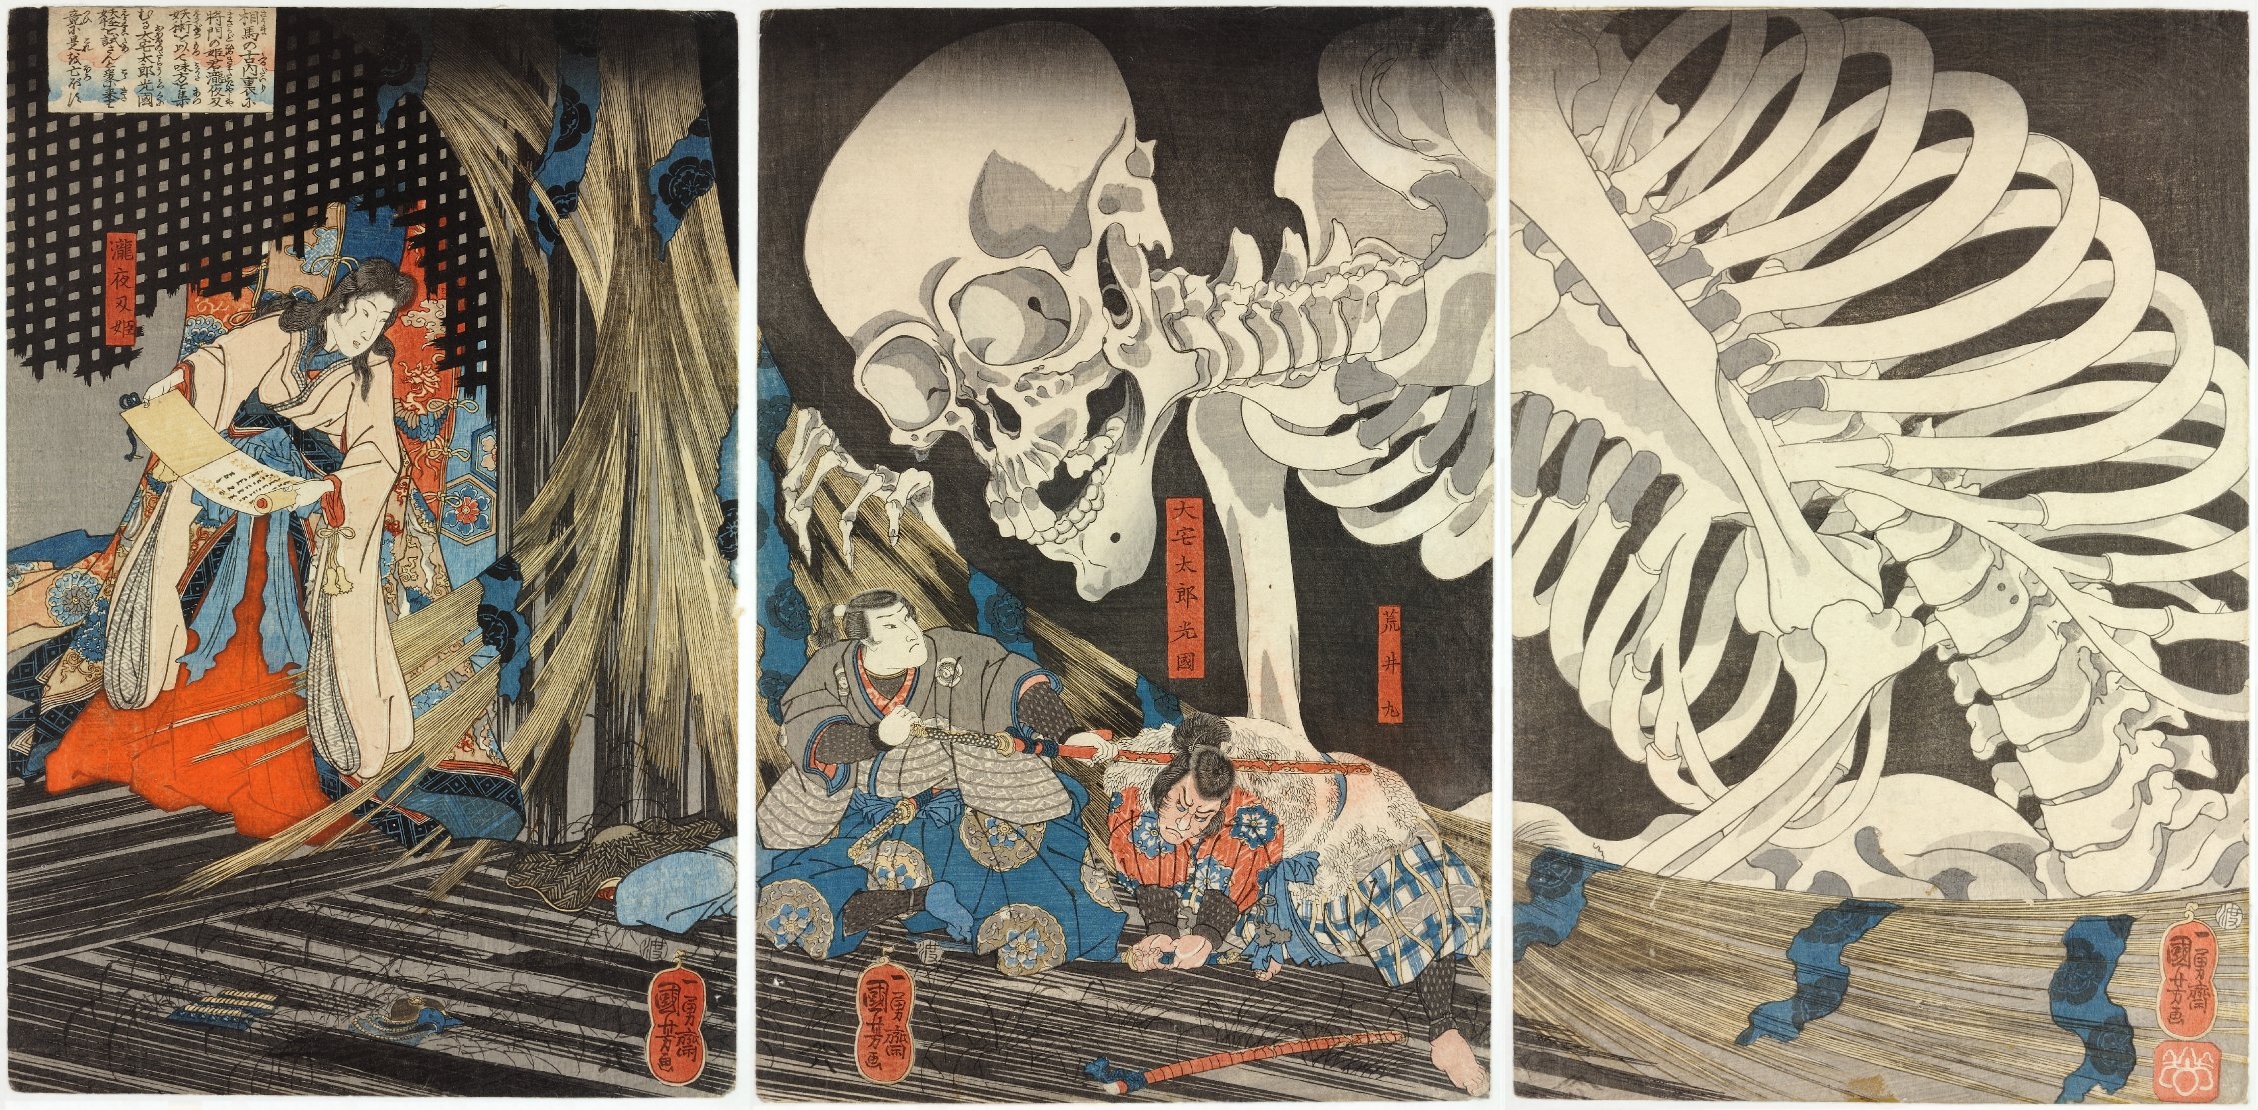 Takiyasha la sorcière et le spectre squelettique by Utagawa Kuniyoshi - Vers 1844 - 35 x 71 cm 